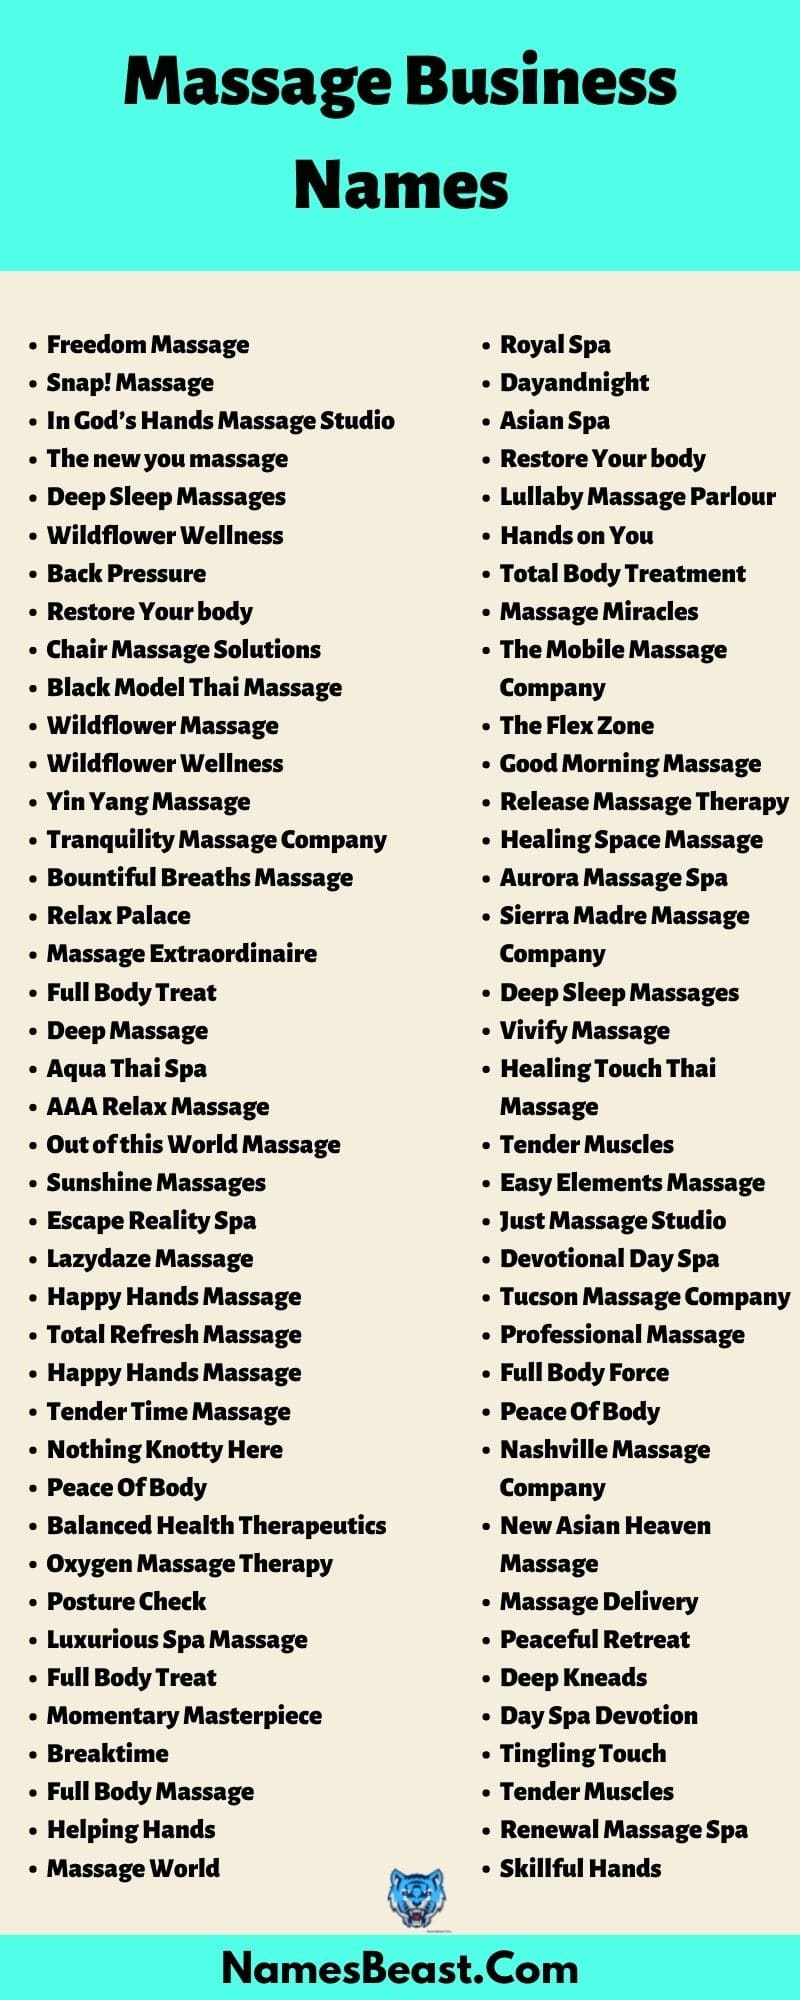 Massage Business Names